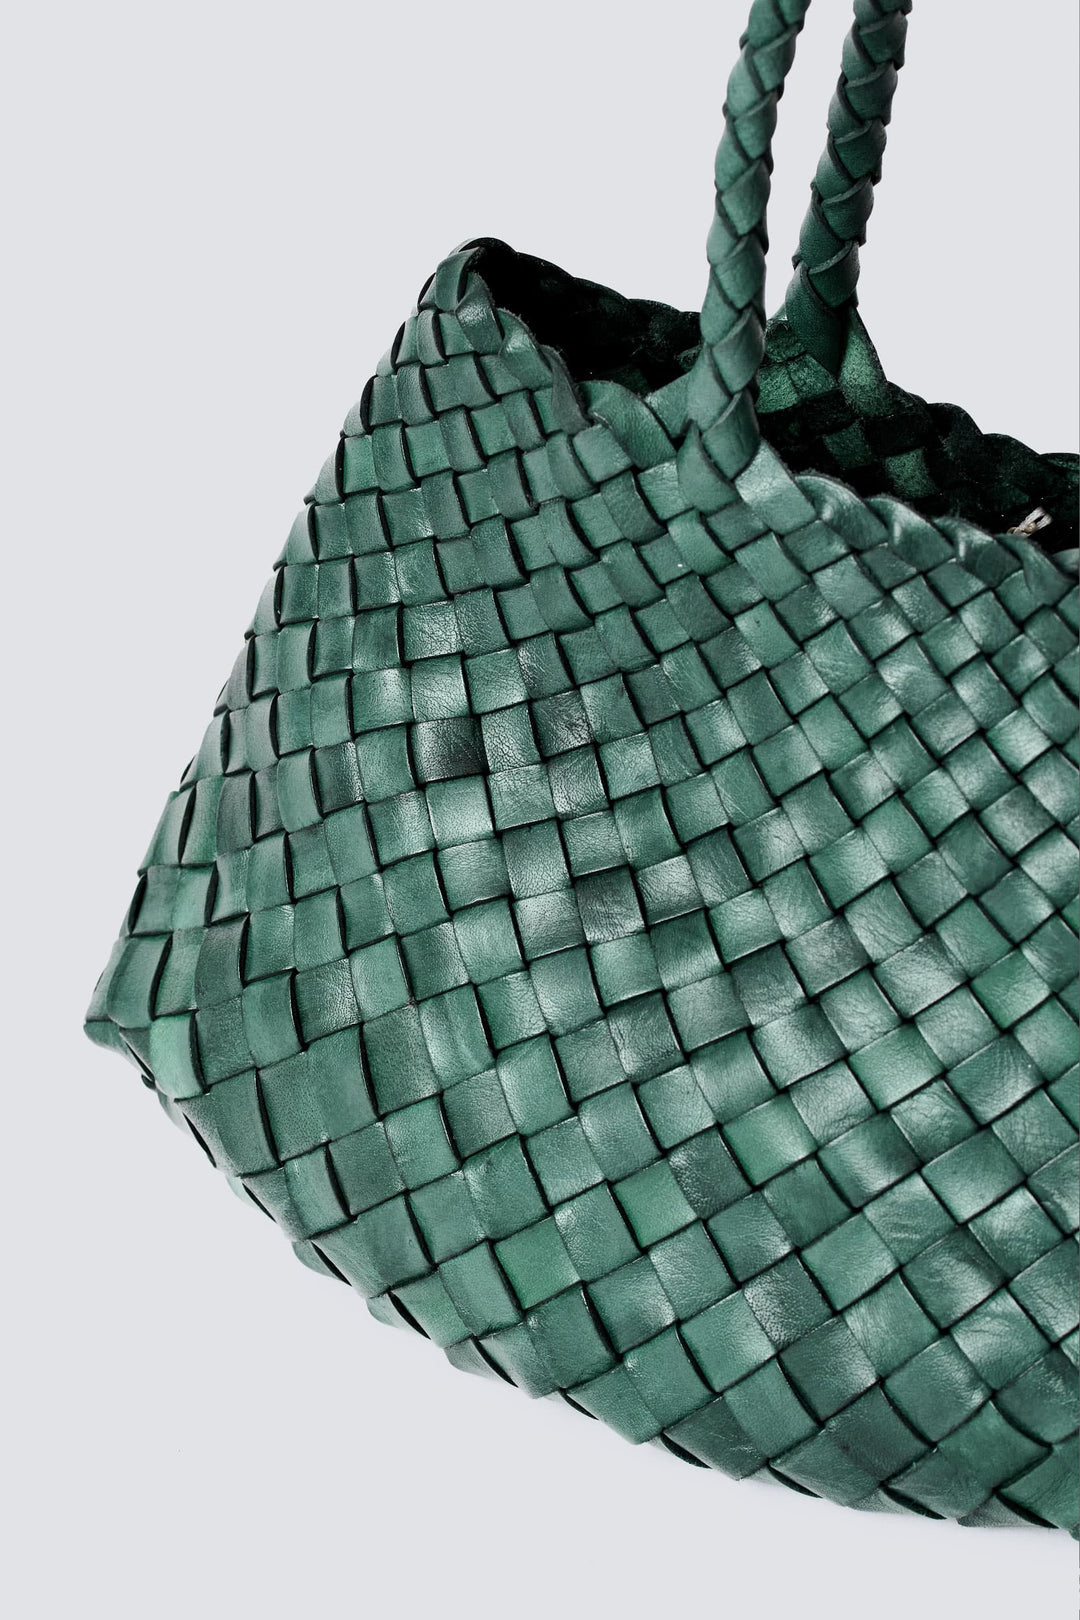 Green City mini woven-leather cross-body bag, Dragon Diffusion